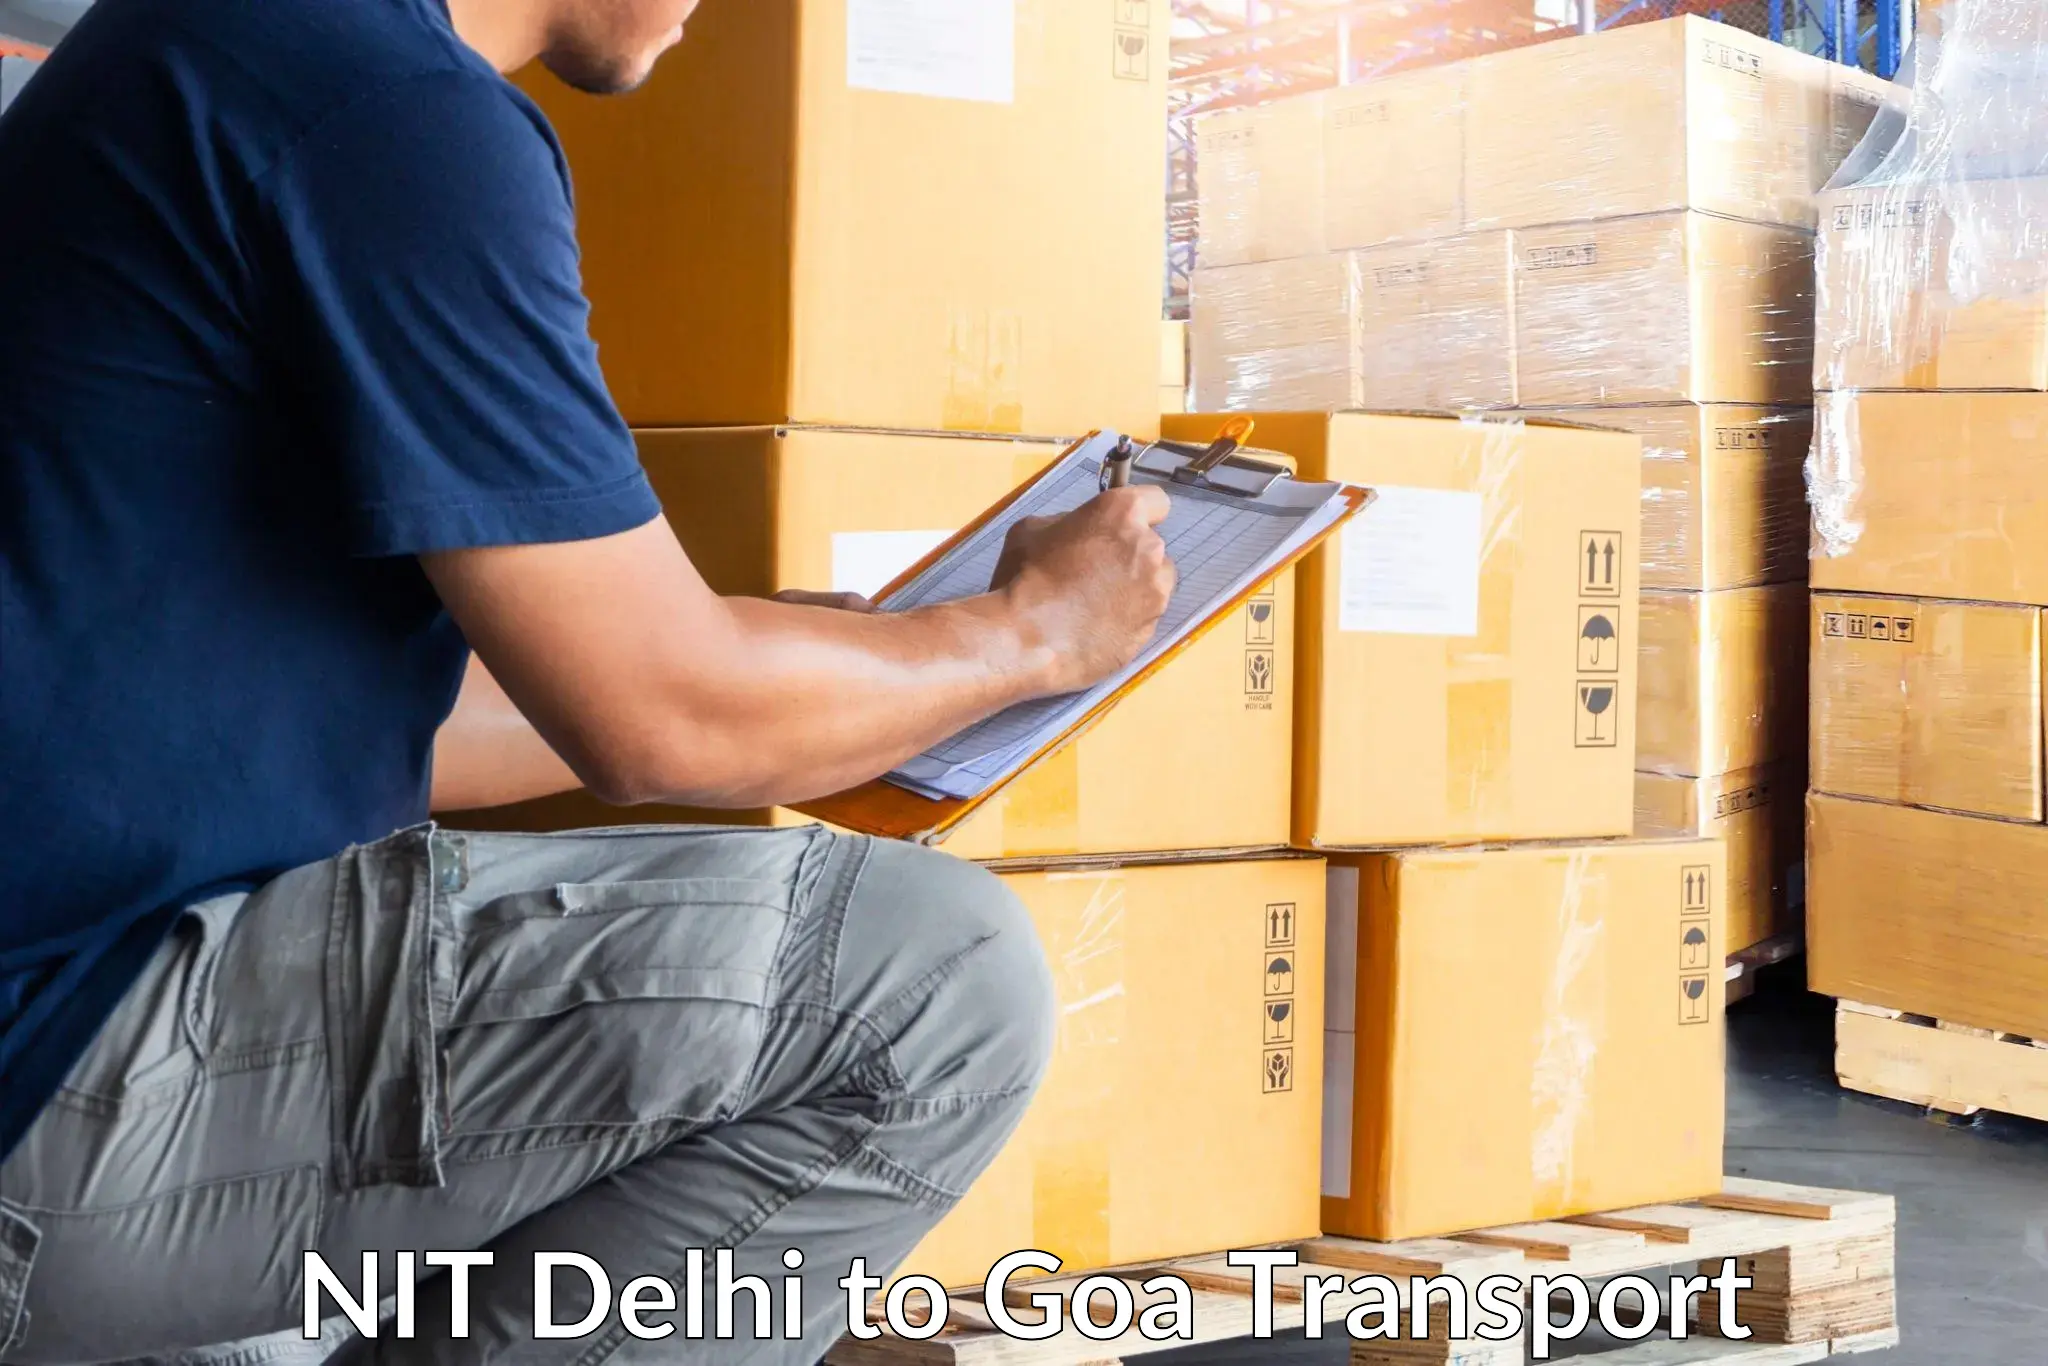 Online transport service NIT Delhi to Goa